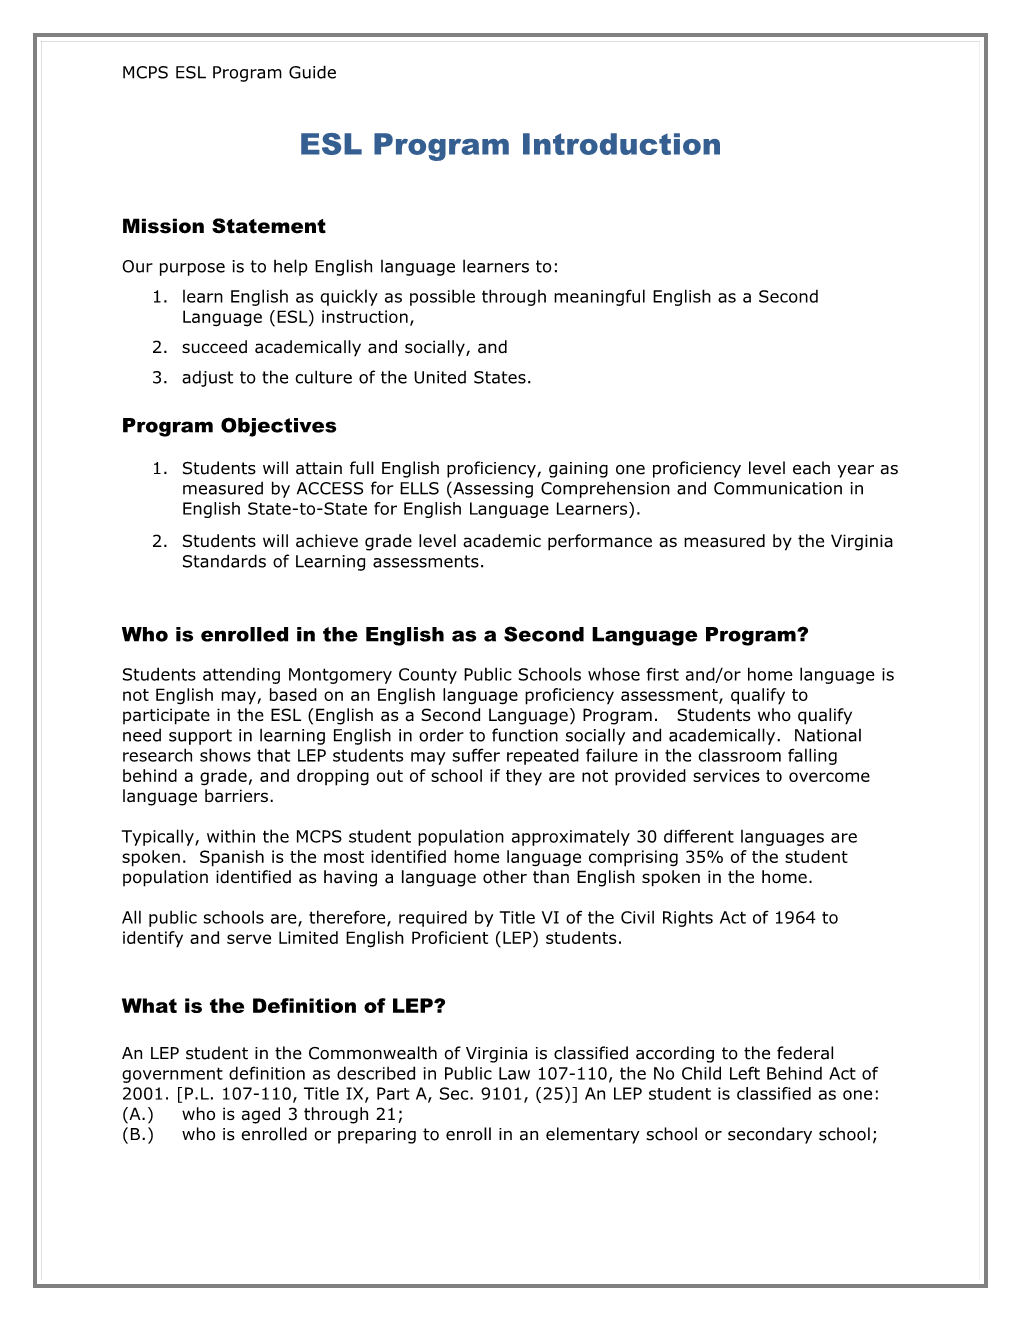 English As a Second Language Program